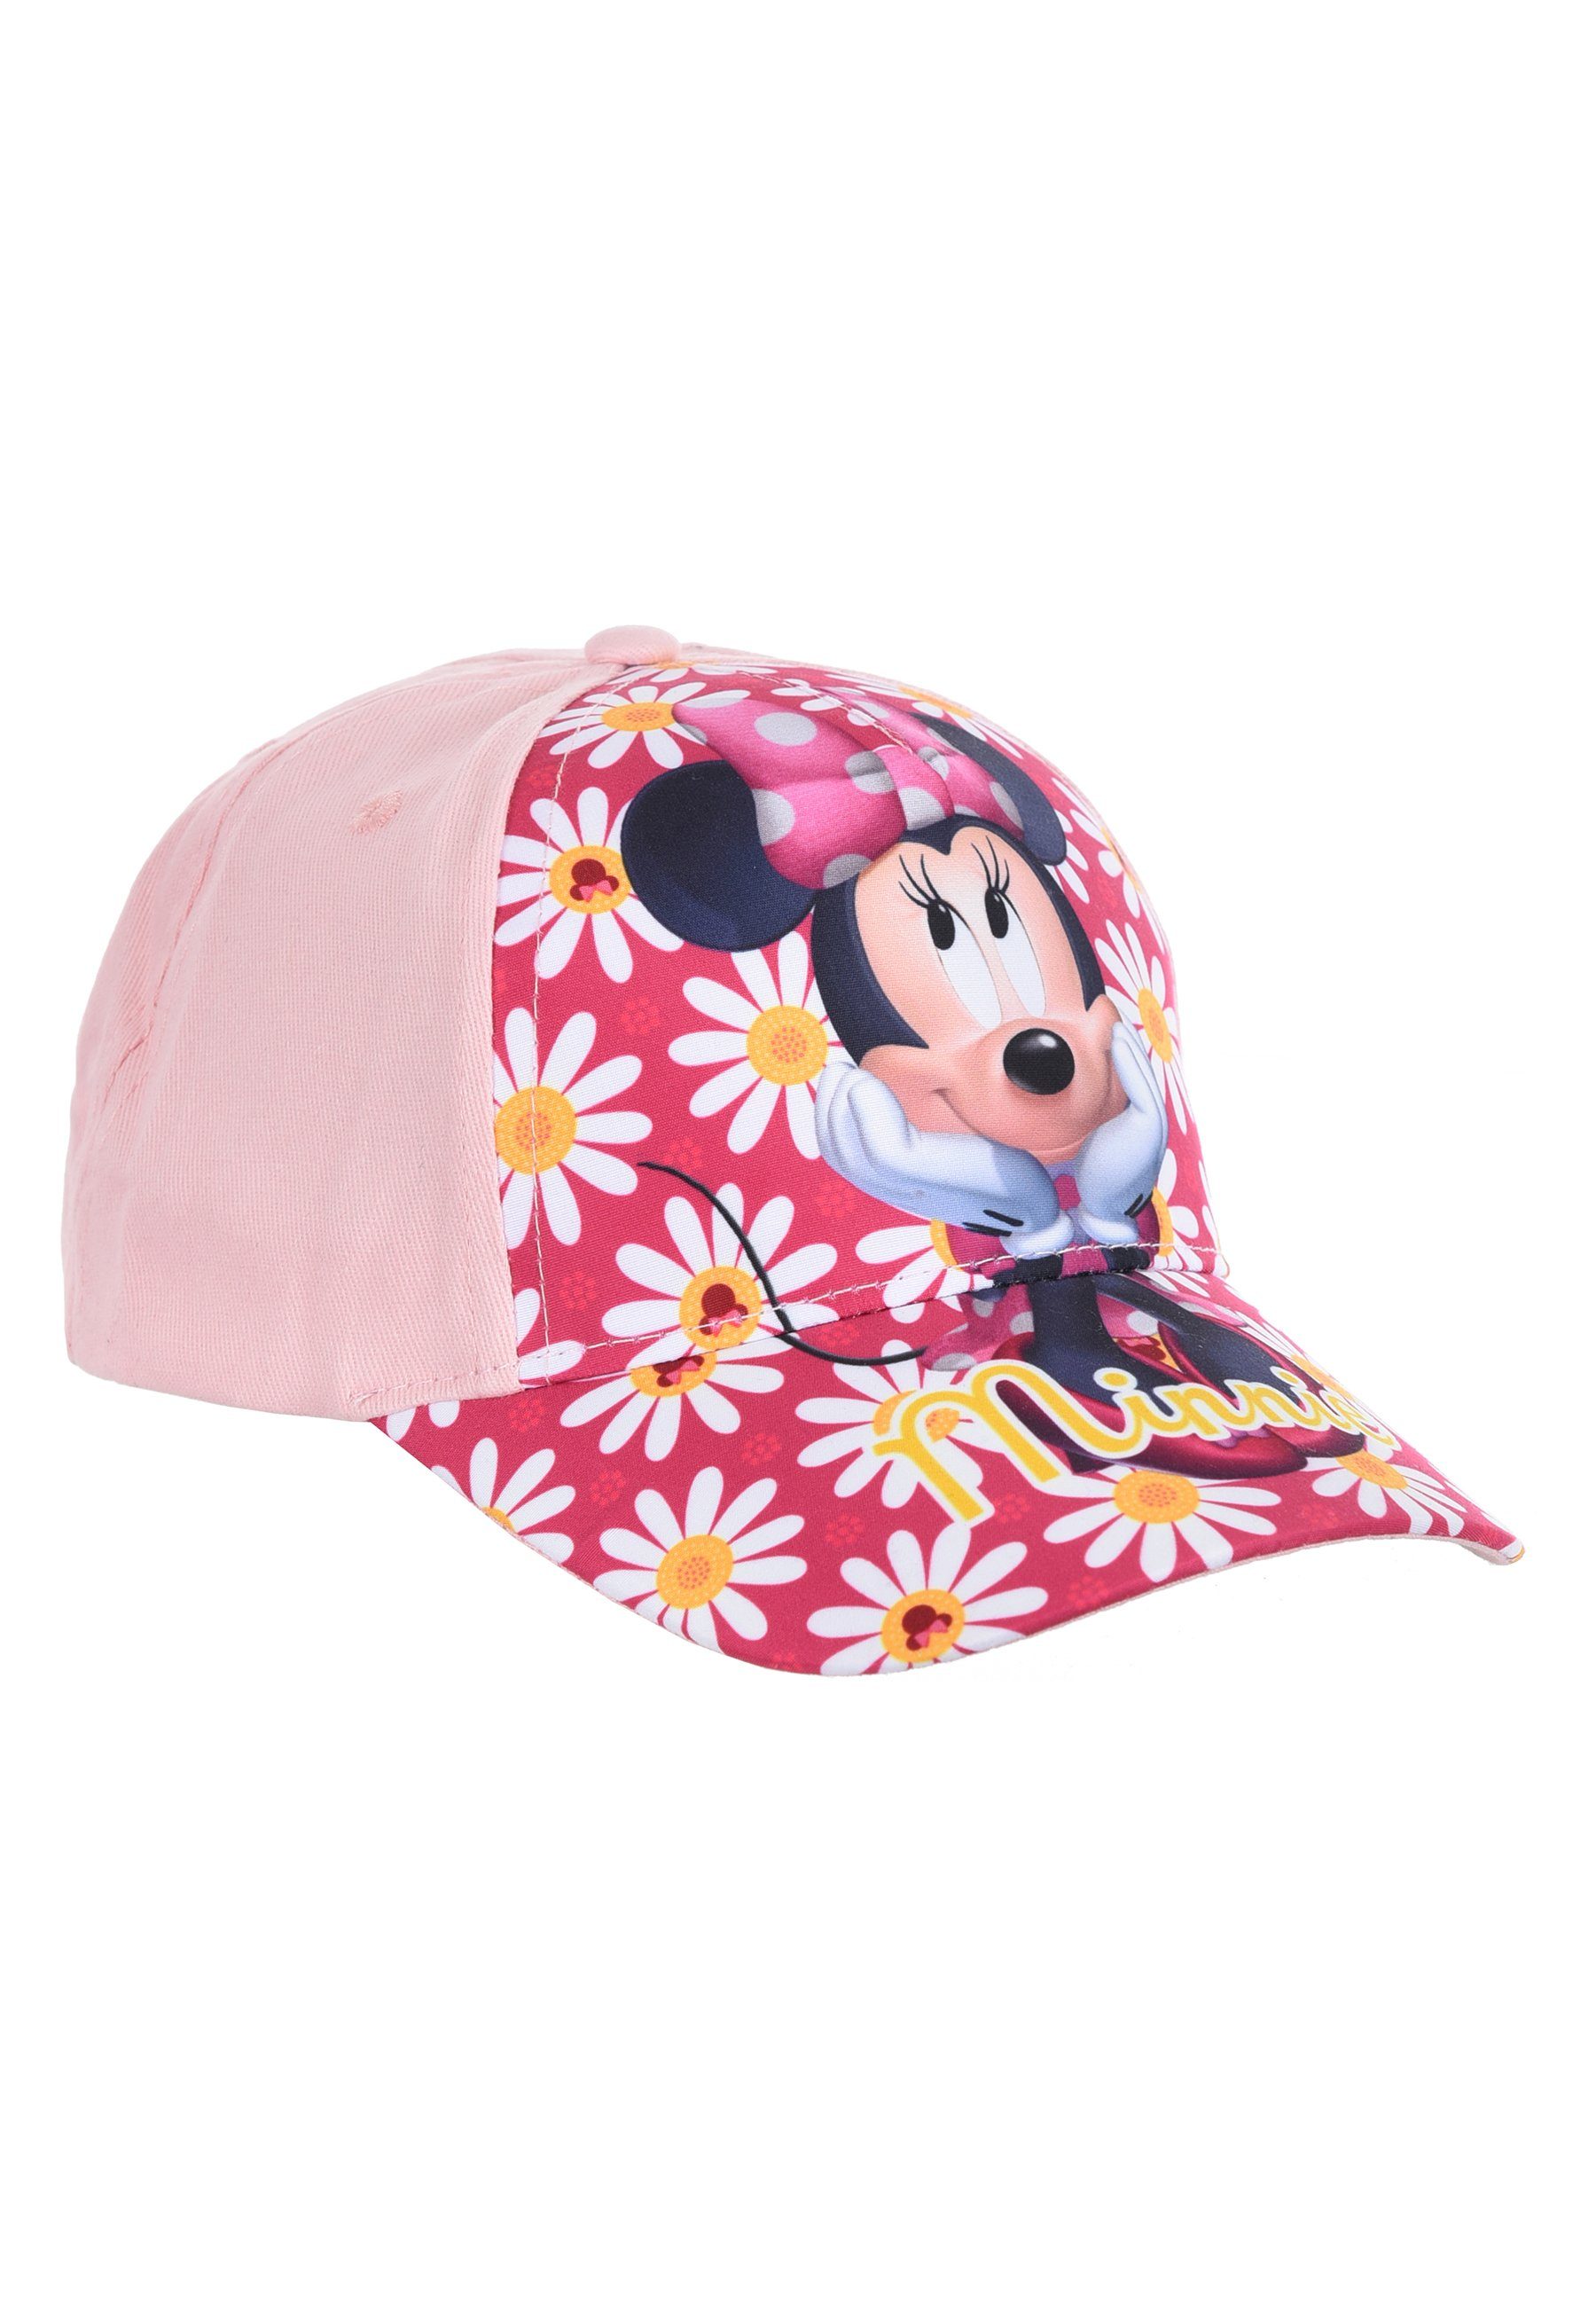 Disney Minnie Mouse Baseball Cap Minnie Kappe Mütze